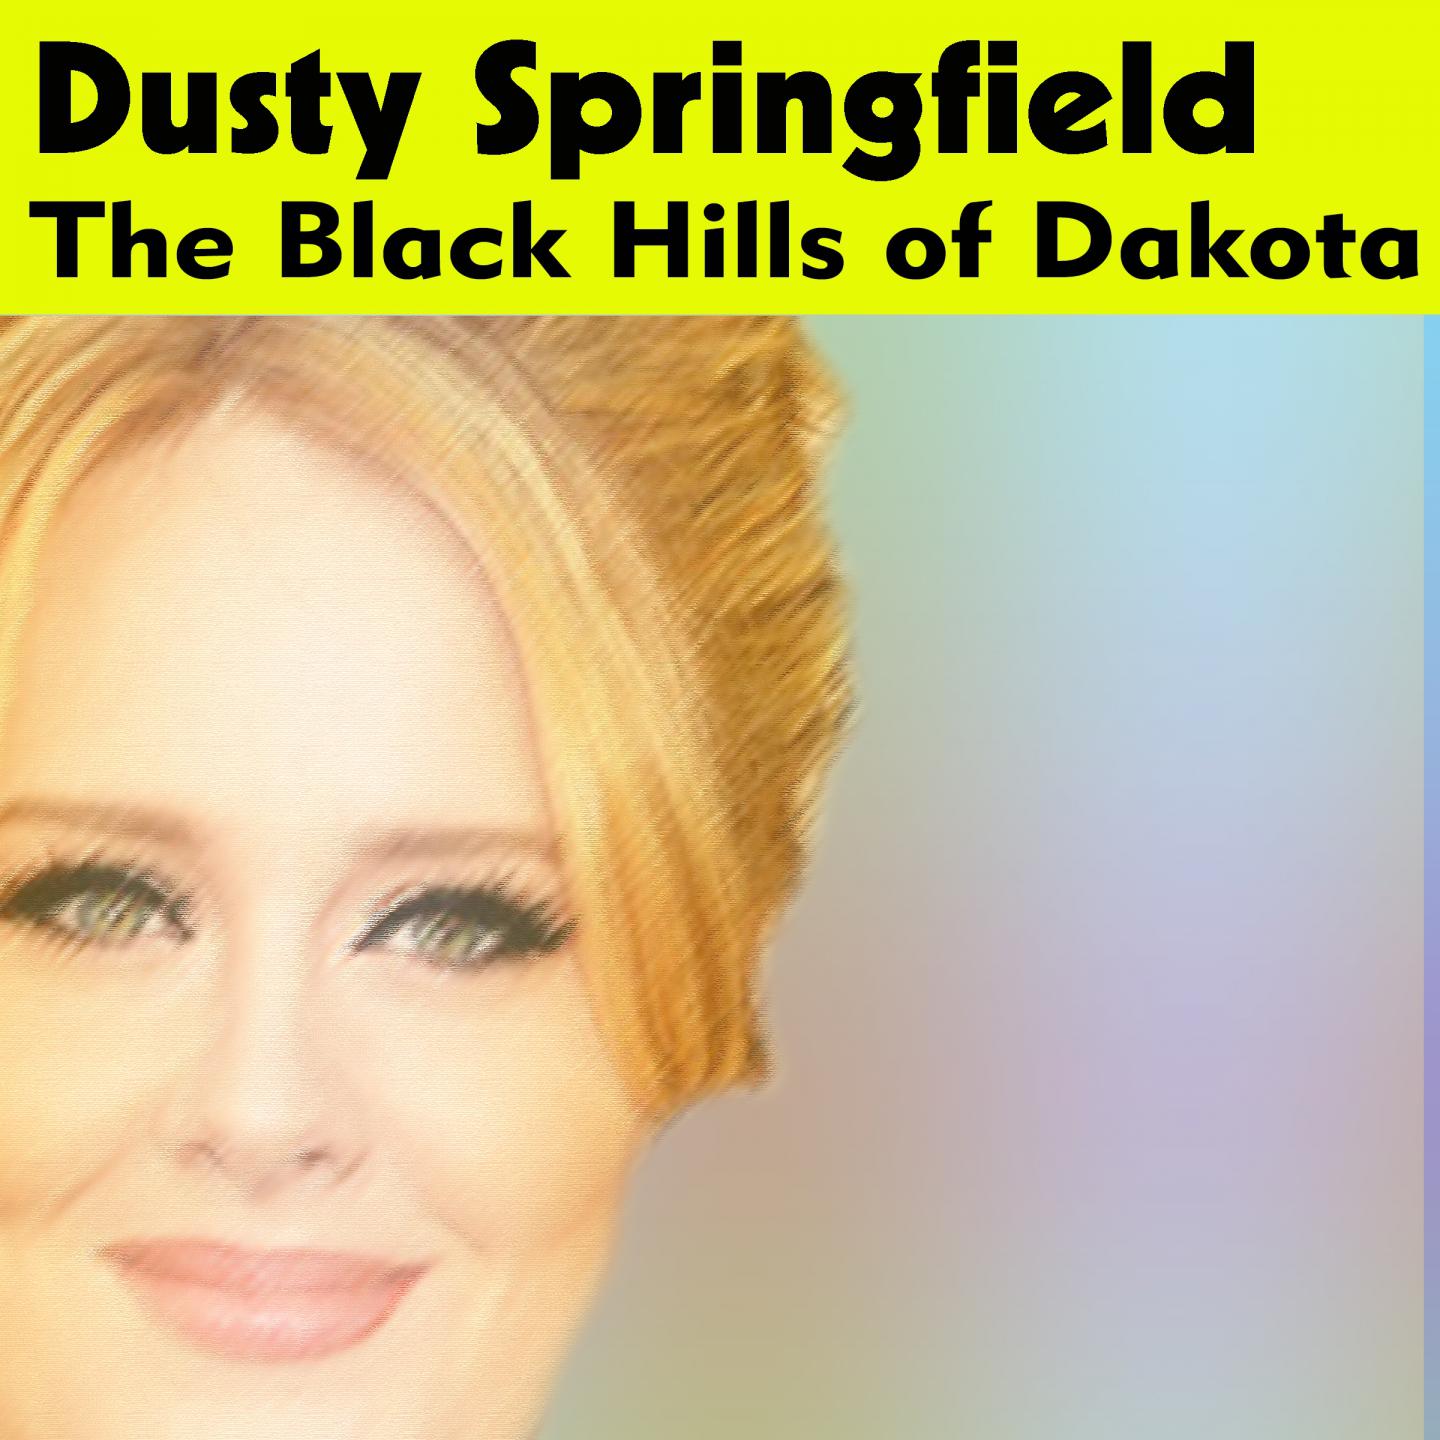 The Black Hills of Dakota